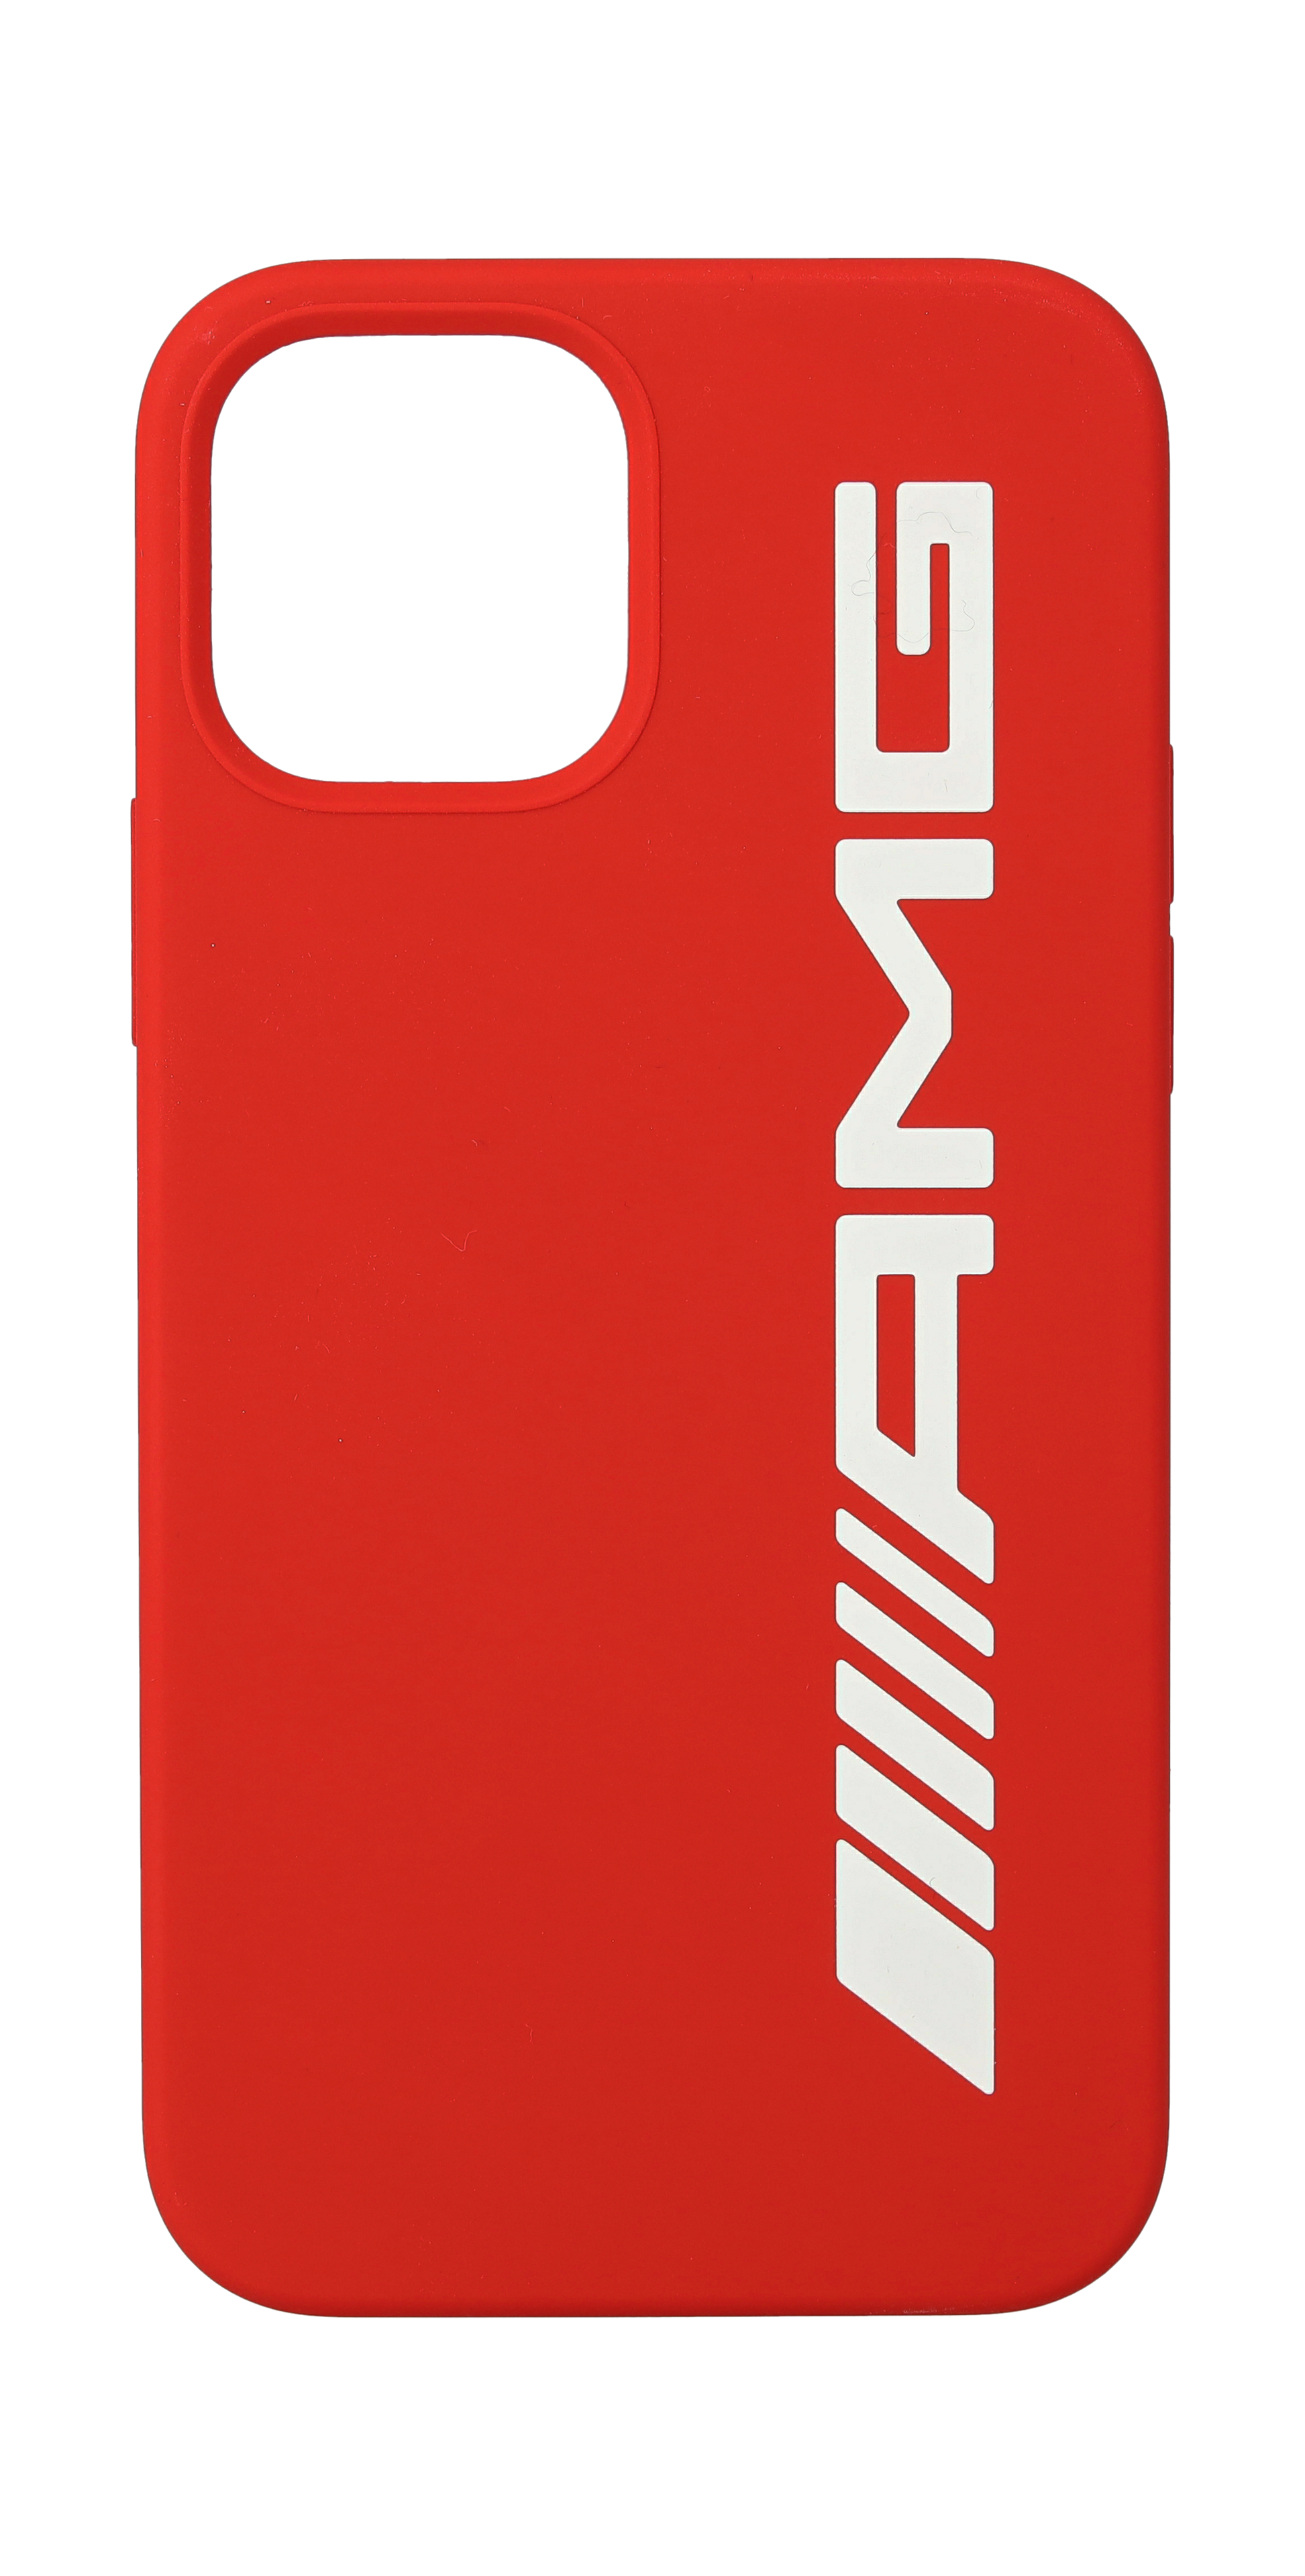 AMG Hülle für iPhone® 12 Pro/iPhone® 12 - rot, Polycarbonat / Silikon / Mikrofaser